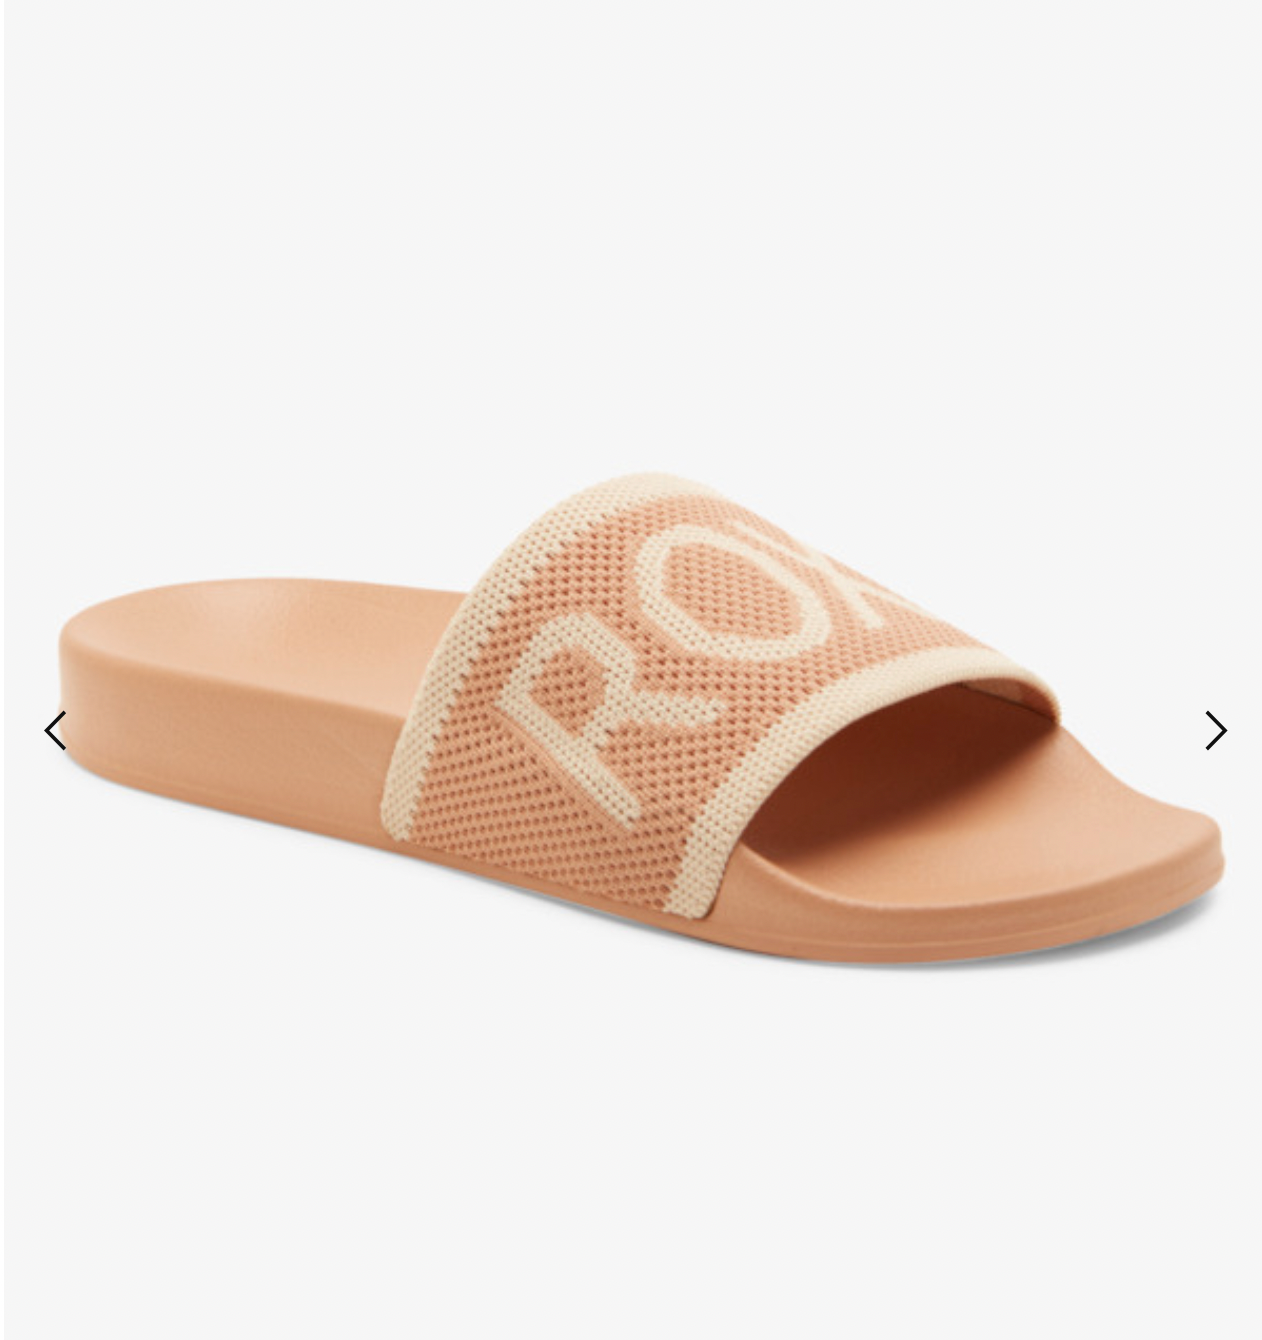 ROXY Slippy Knit - Sandals for Women